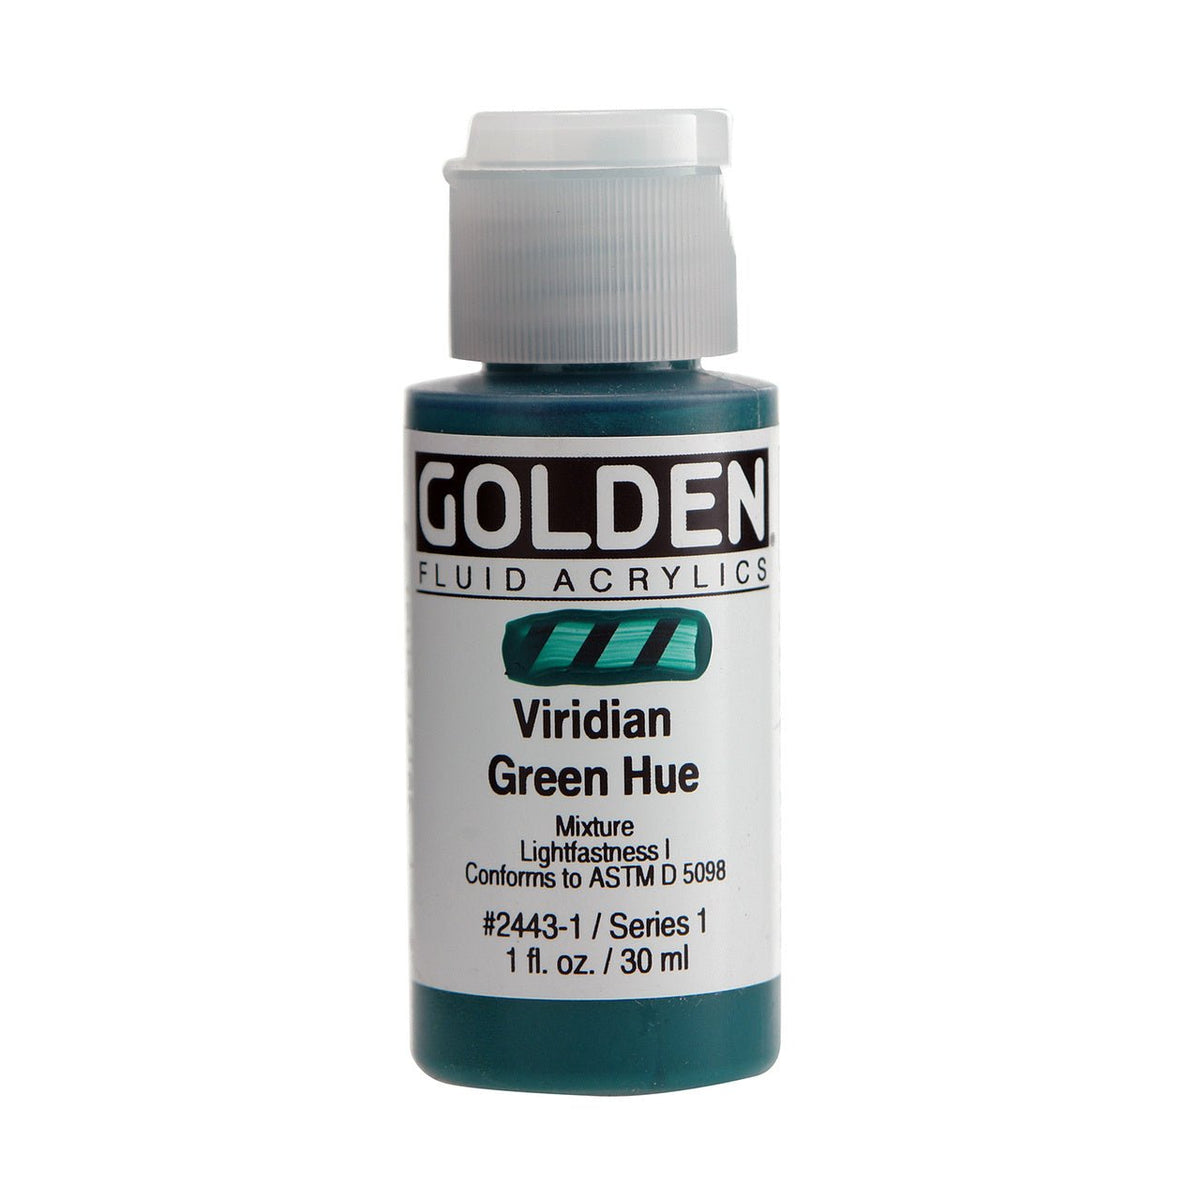 Golden Fluid Acrylic Viridian Green Hue 1 oz - merriartist.com